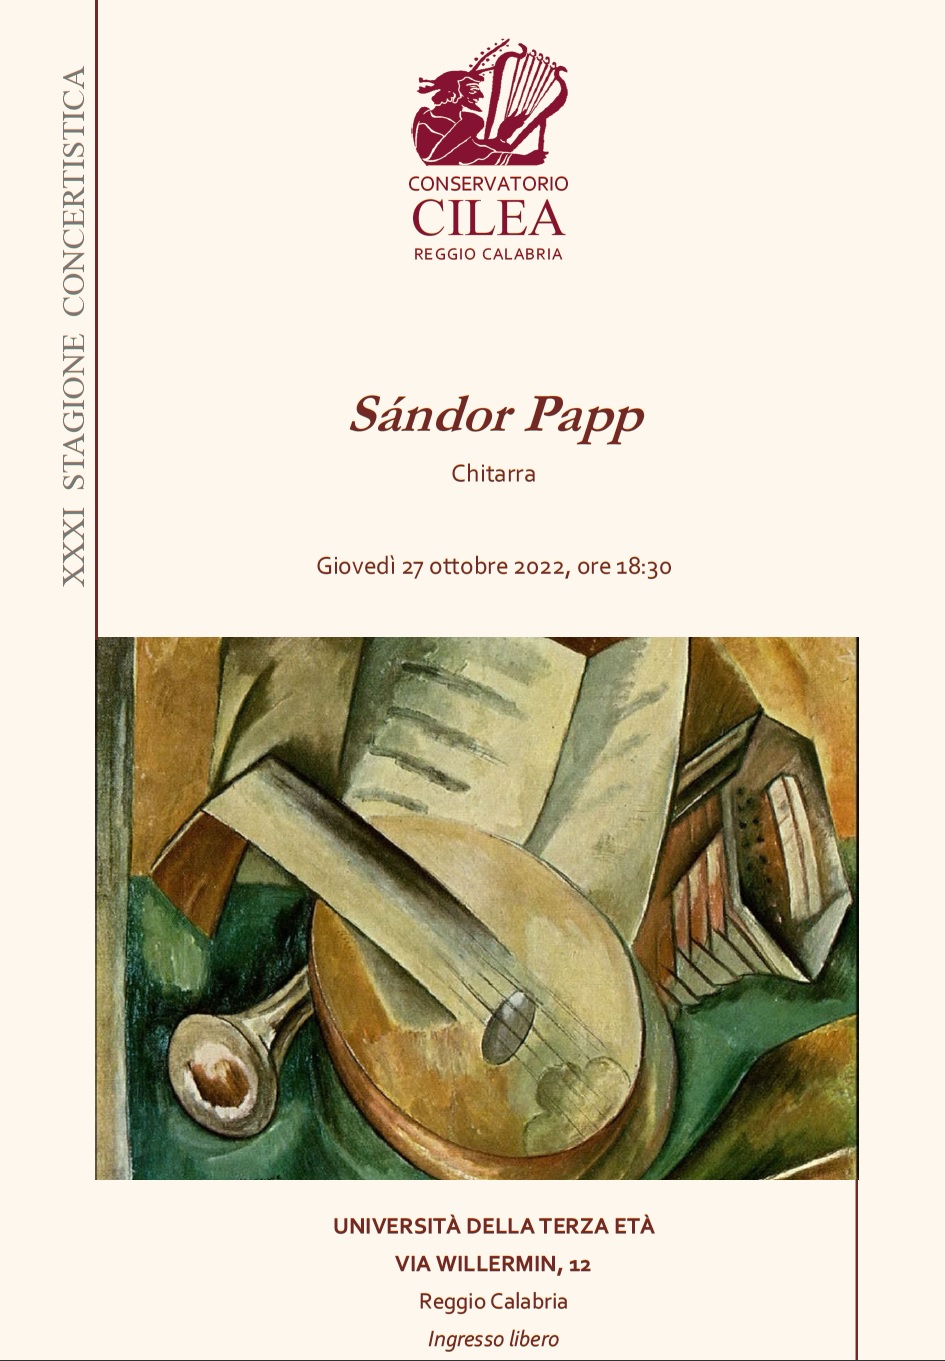 Sandor Papp, chitarra 27-10-2022 ore 18.30 UniTRE  RC